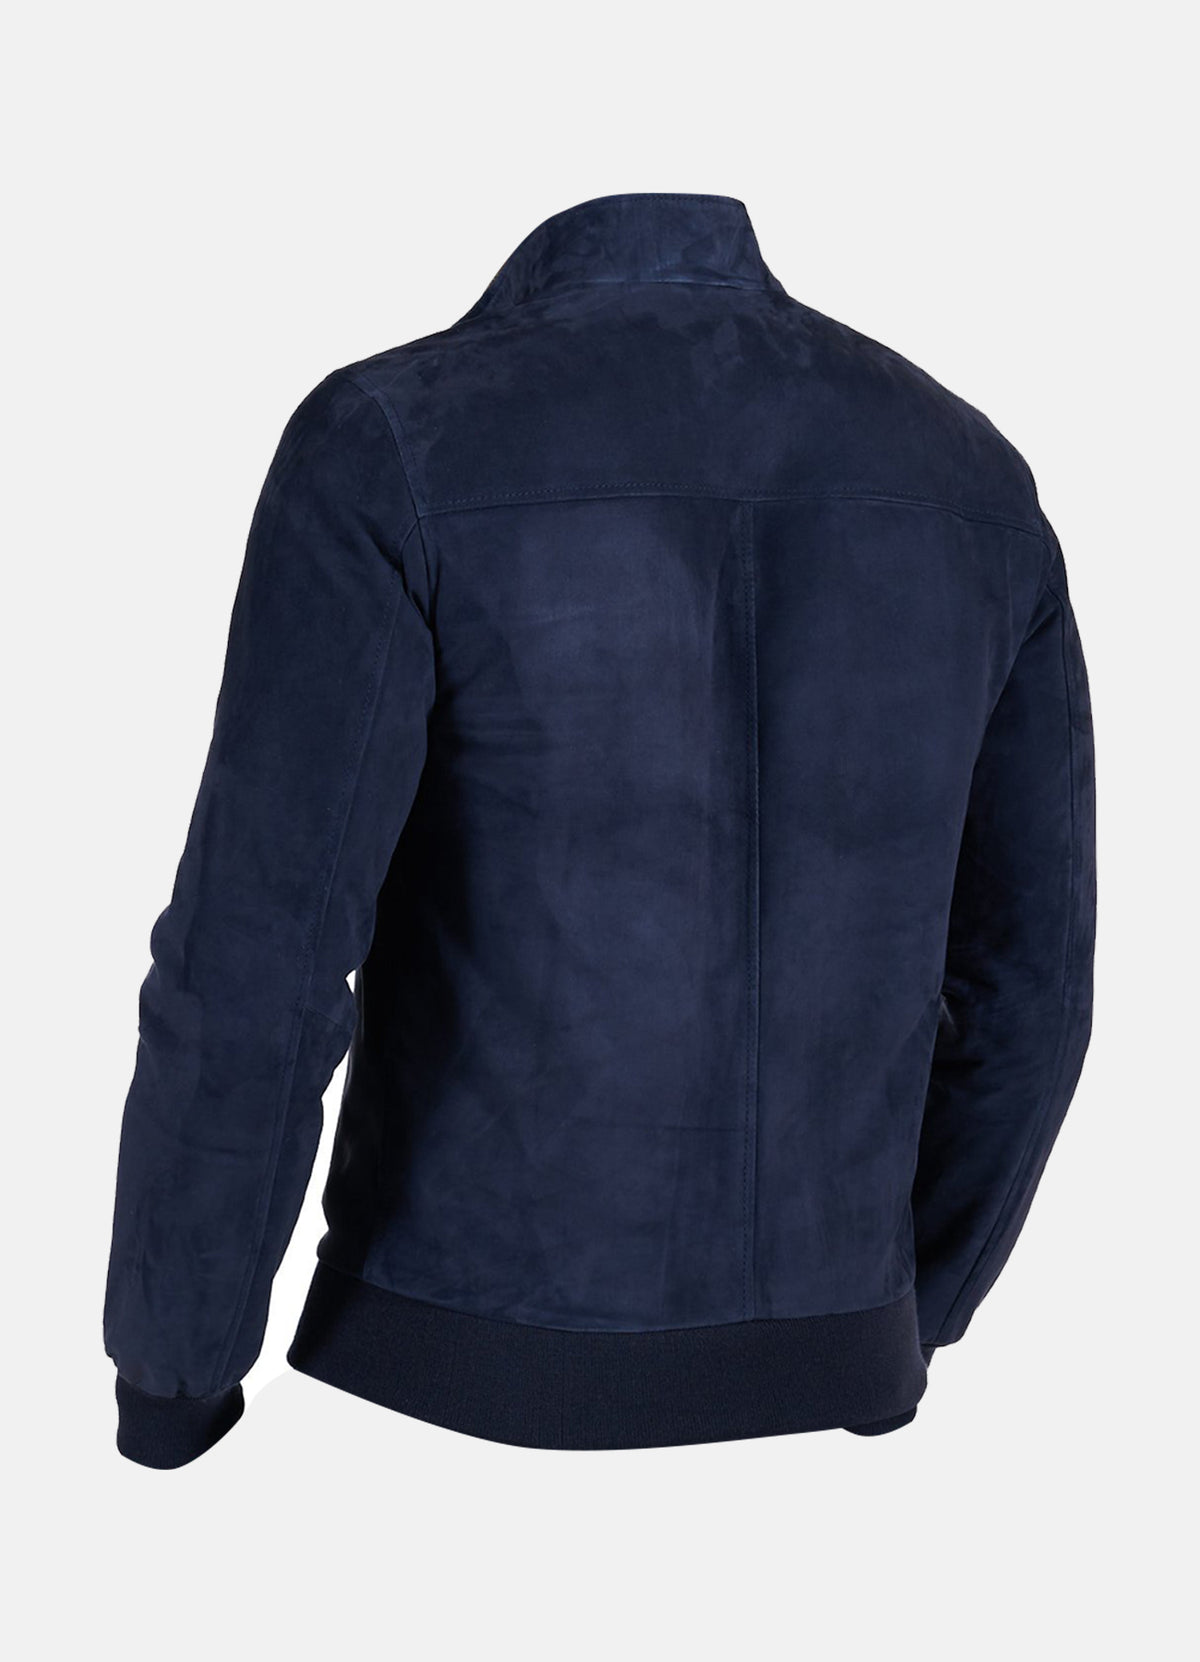 Mens Midnight Blue Suede Leather Jacket | Elite Jacket